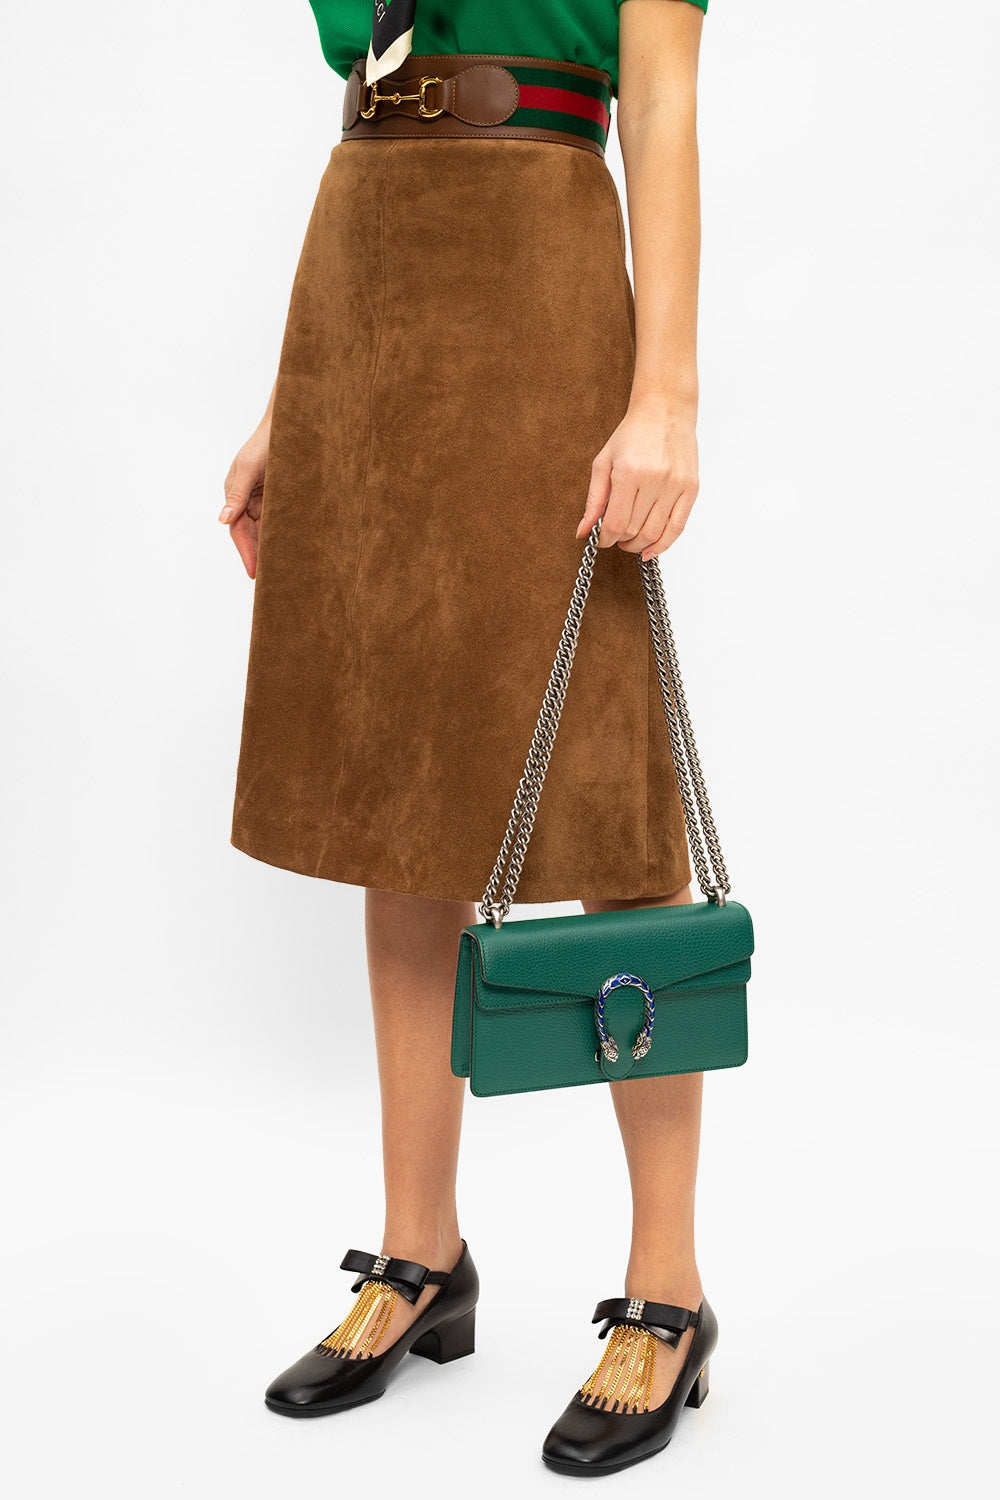 Gucci Dionysus Super Mini Leather Shoulder Bag in Green